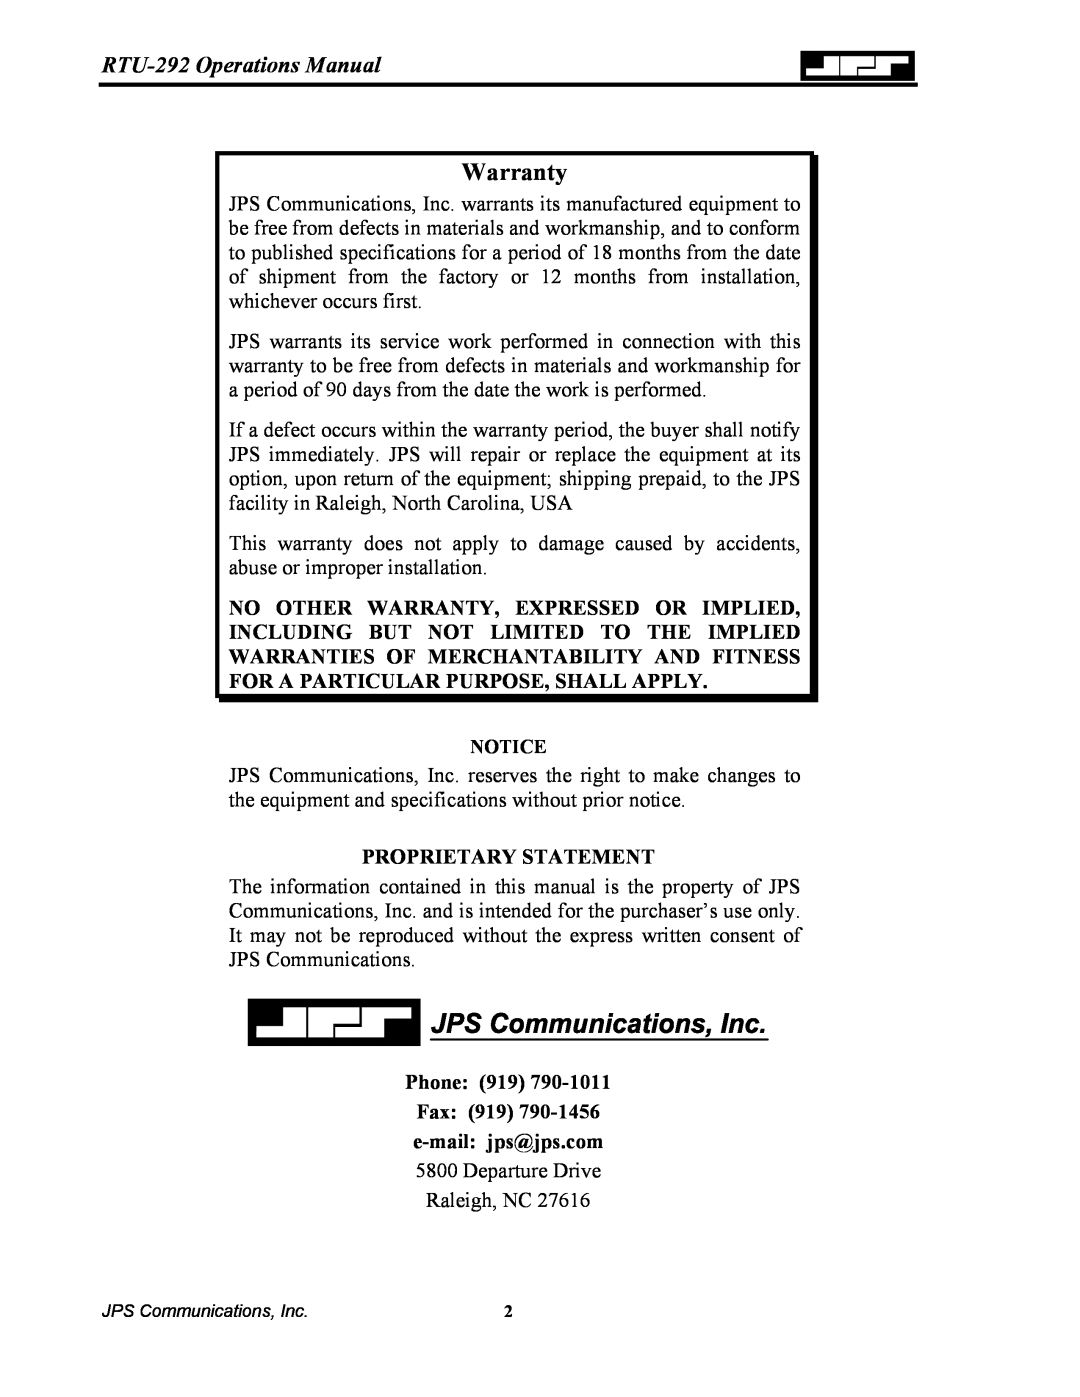 Nortel Networks operation manual Warranty, RTU-292 Operations Manual, Proprietary Statement 